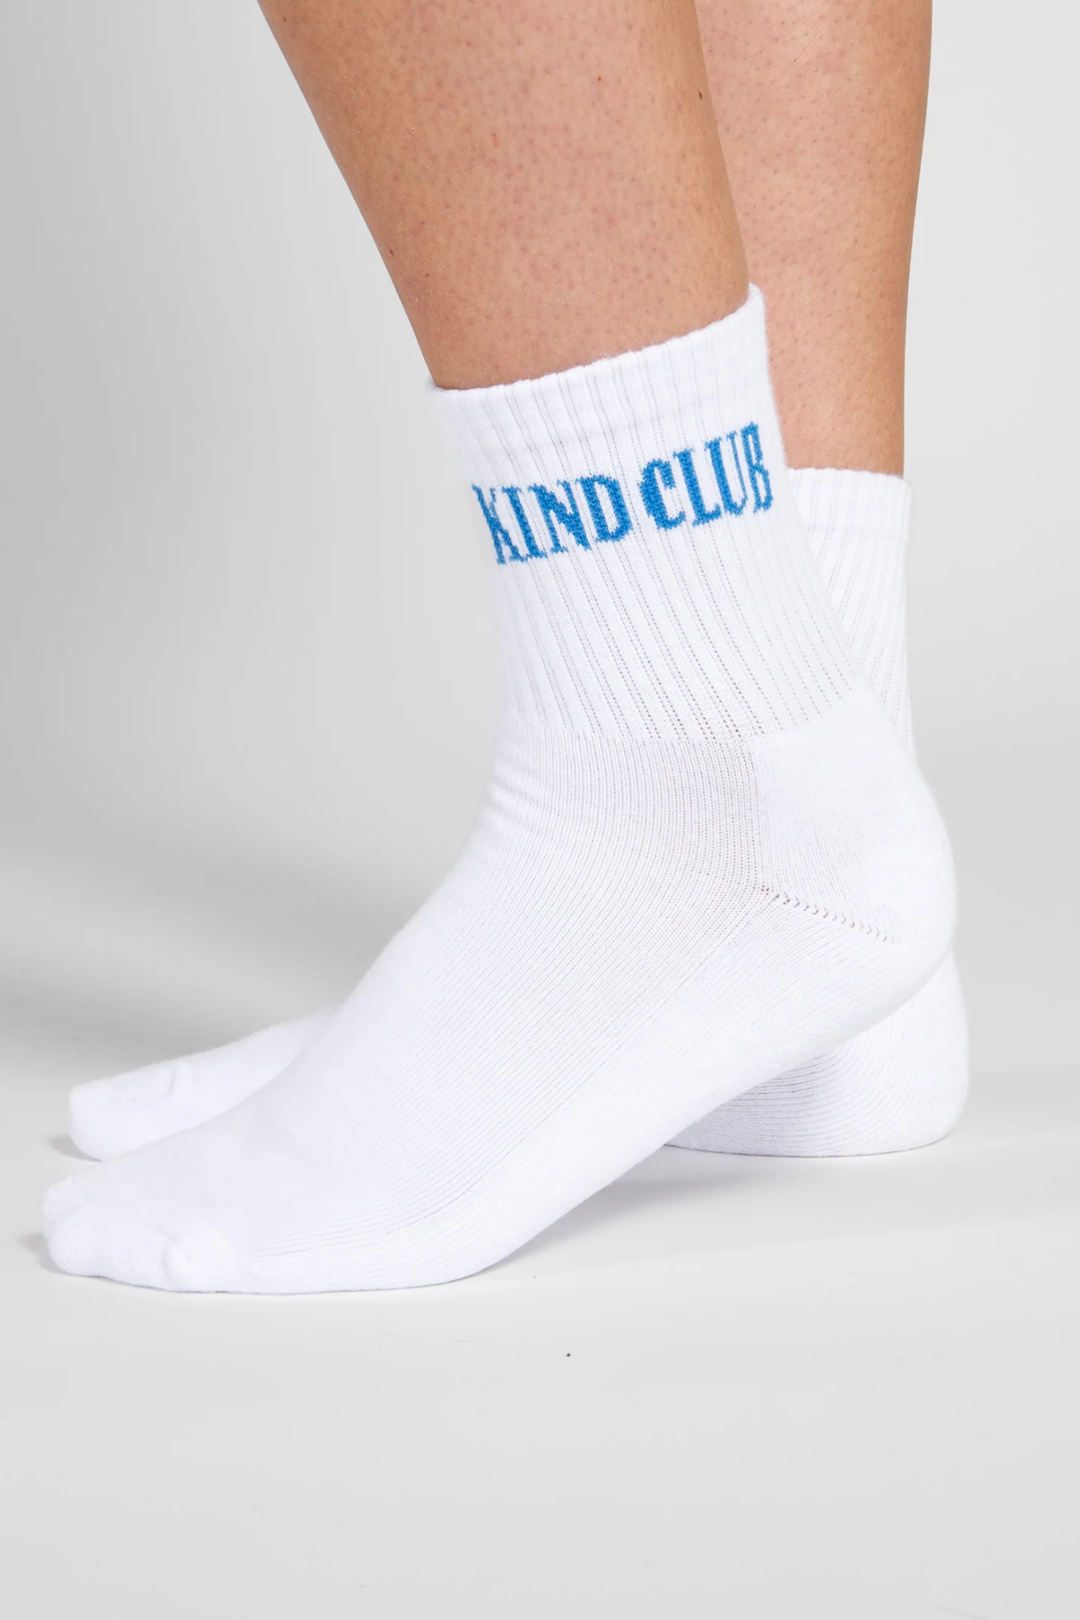 "Kind Club" Socks